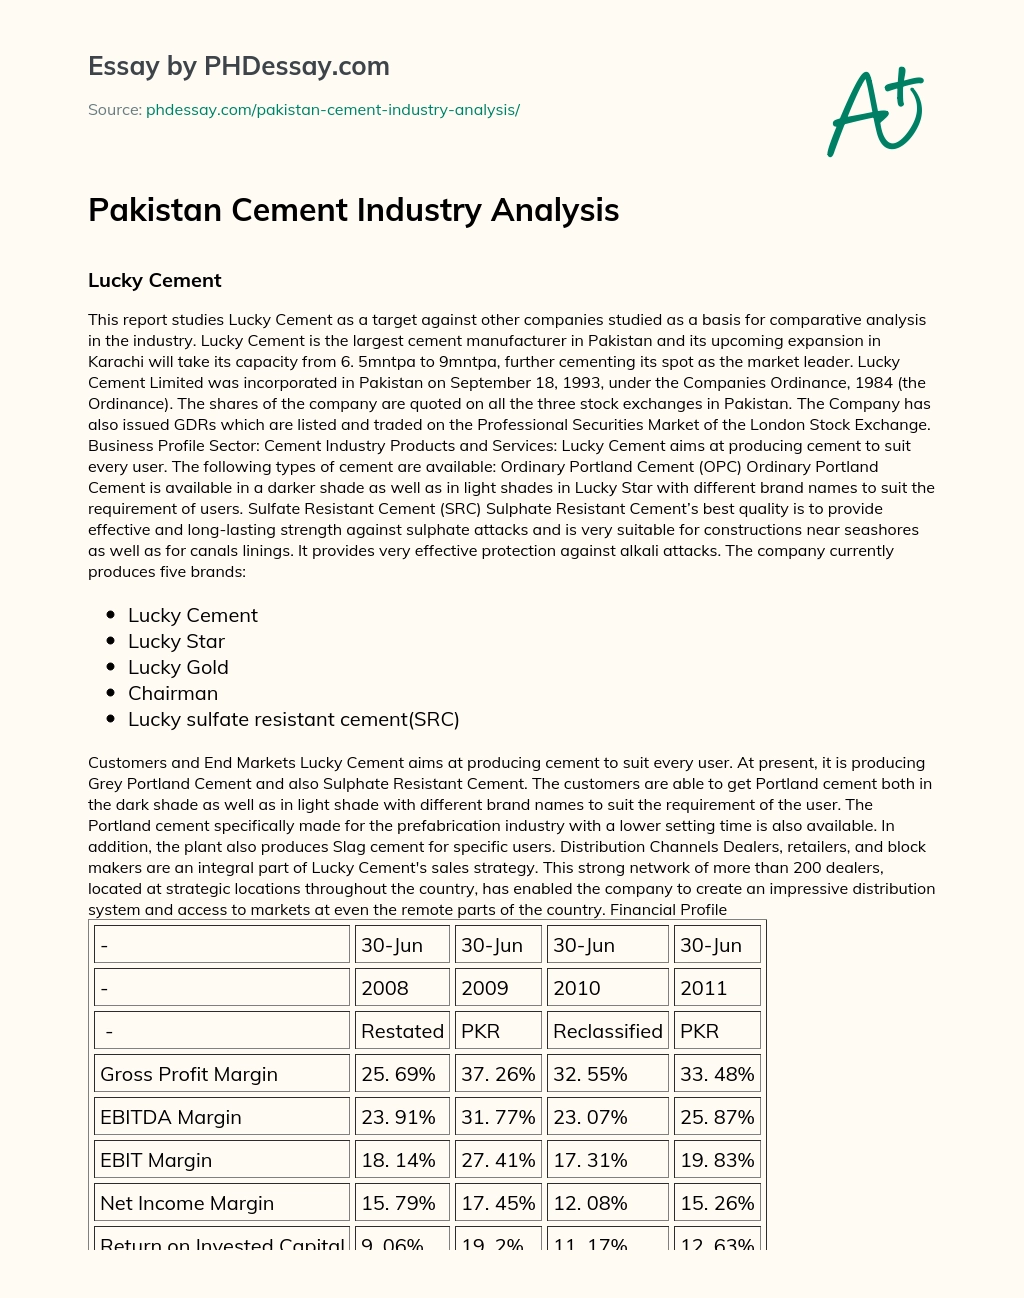 Pakistan Cement Industry Analysis essay